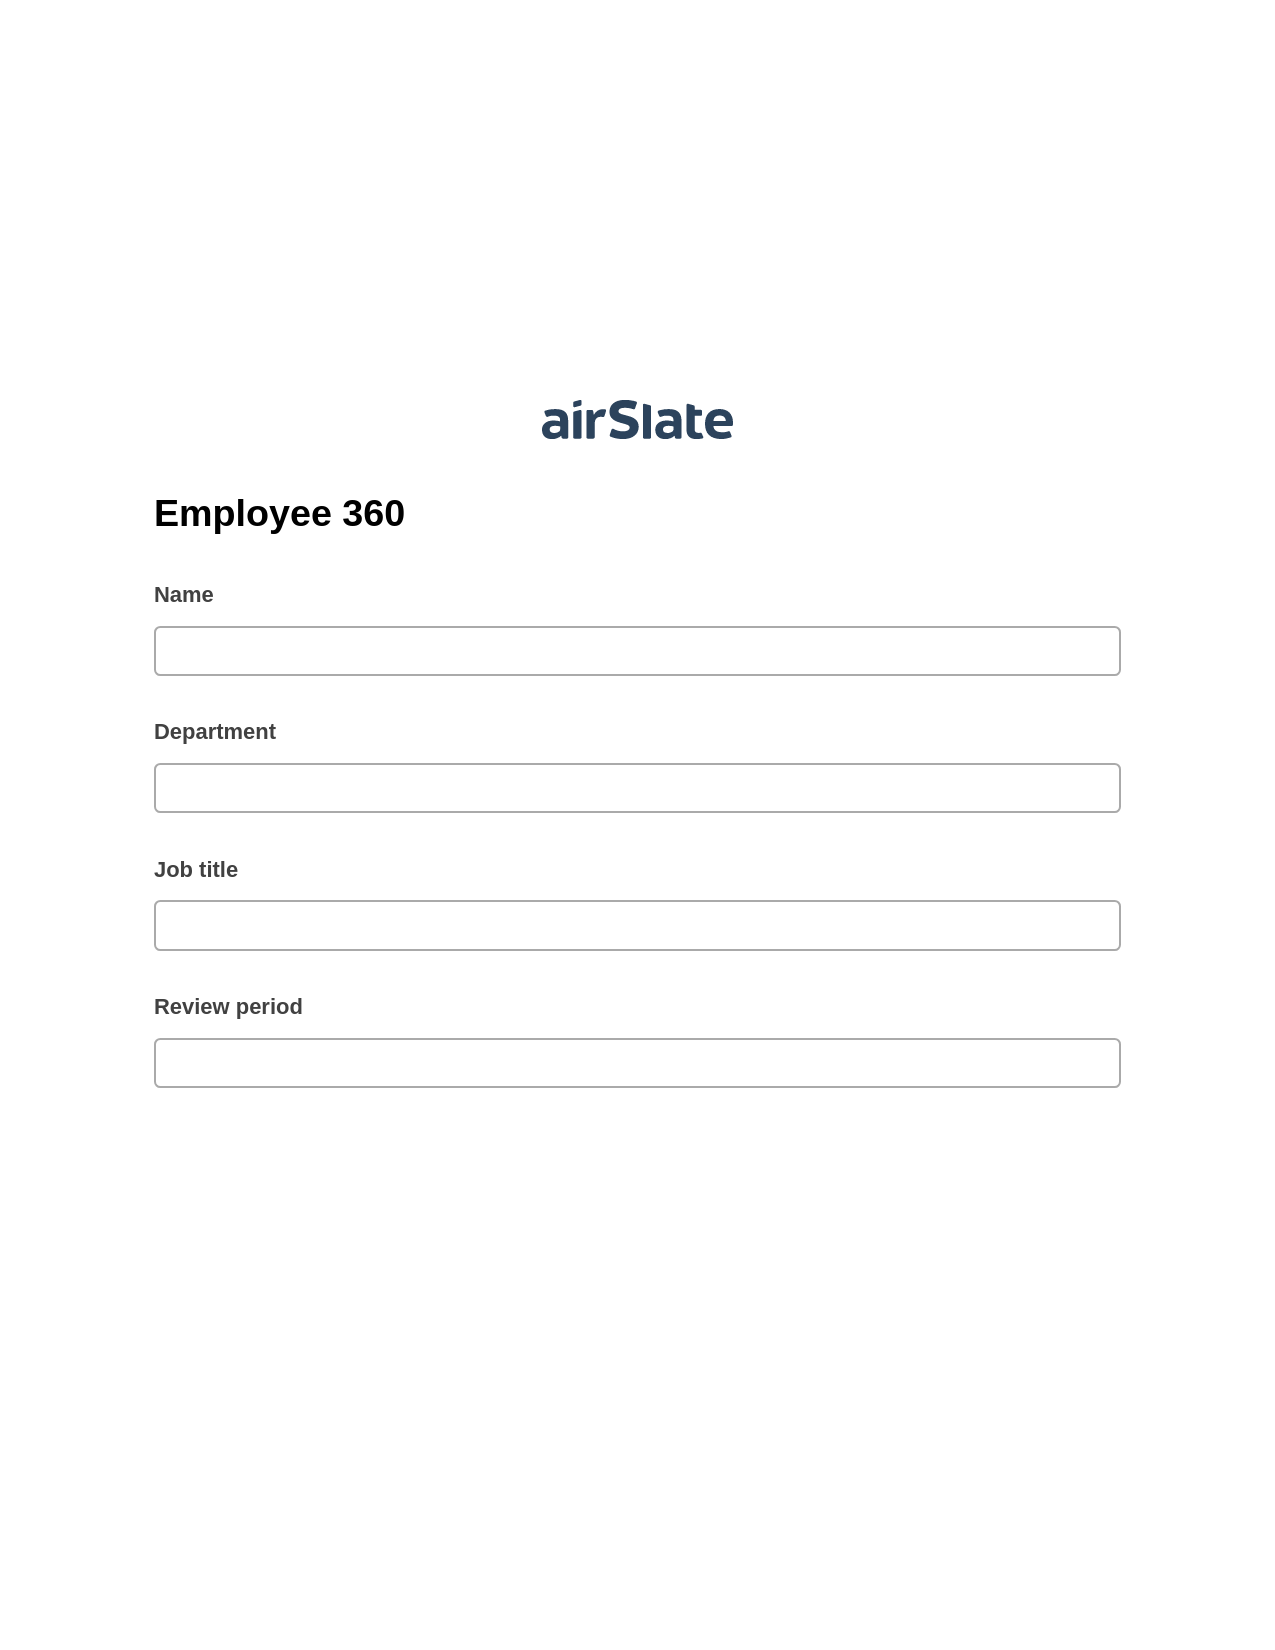 Employee 360 Pre-fill Dropdowns from MySQL Bot, Add Tags to Slate Bot, Export to MySQL Bot